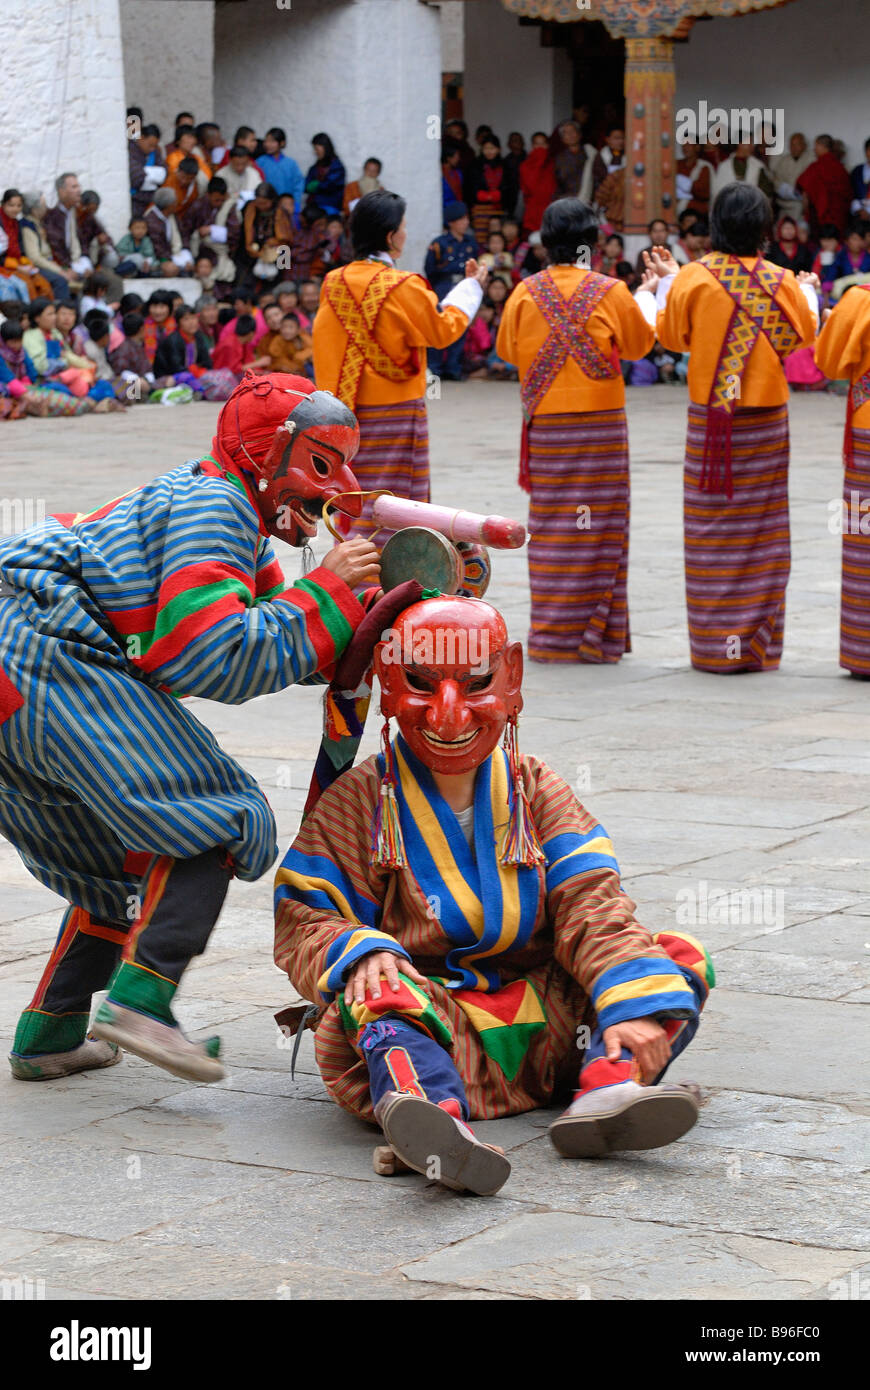 Bhutan, Punakha, Punakha Tsechu festival, Atsaras (clowns) entertaining the audience with a wooden phallus Stock Photo